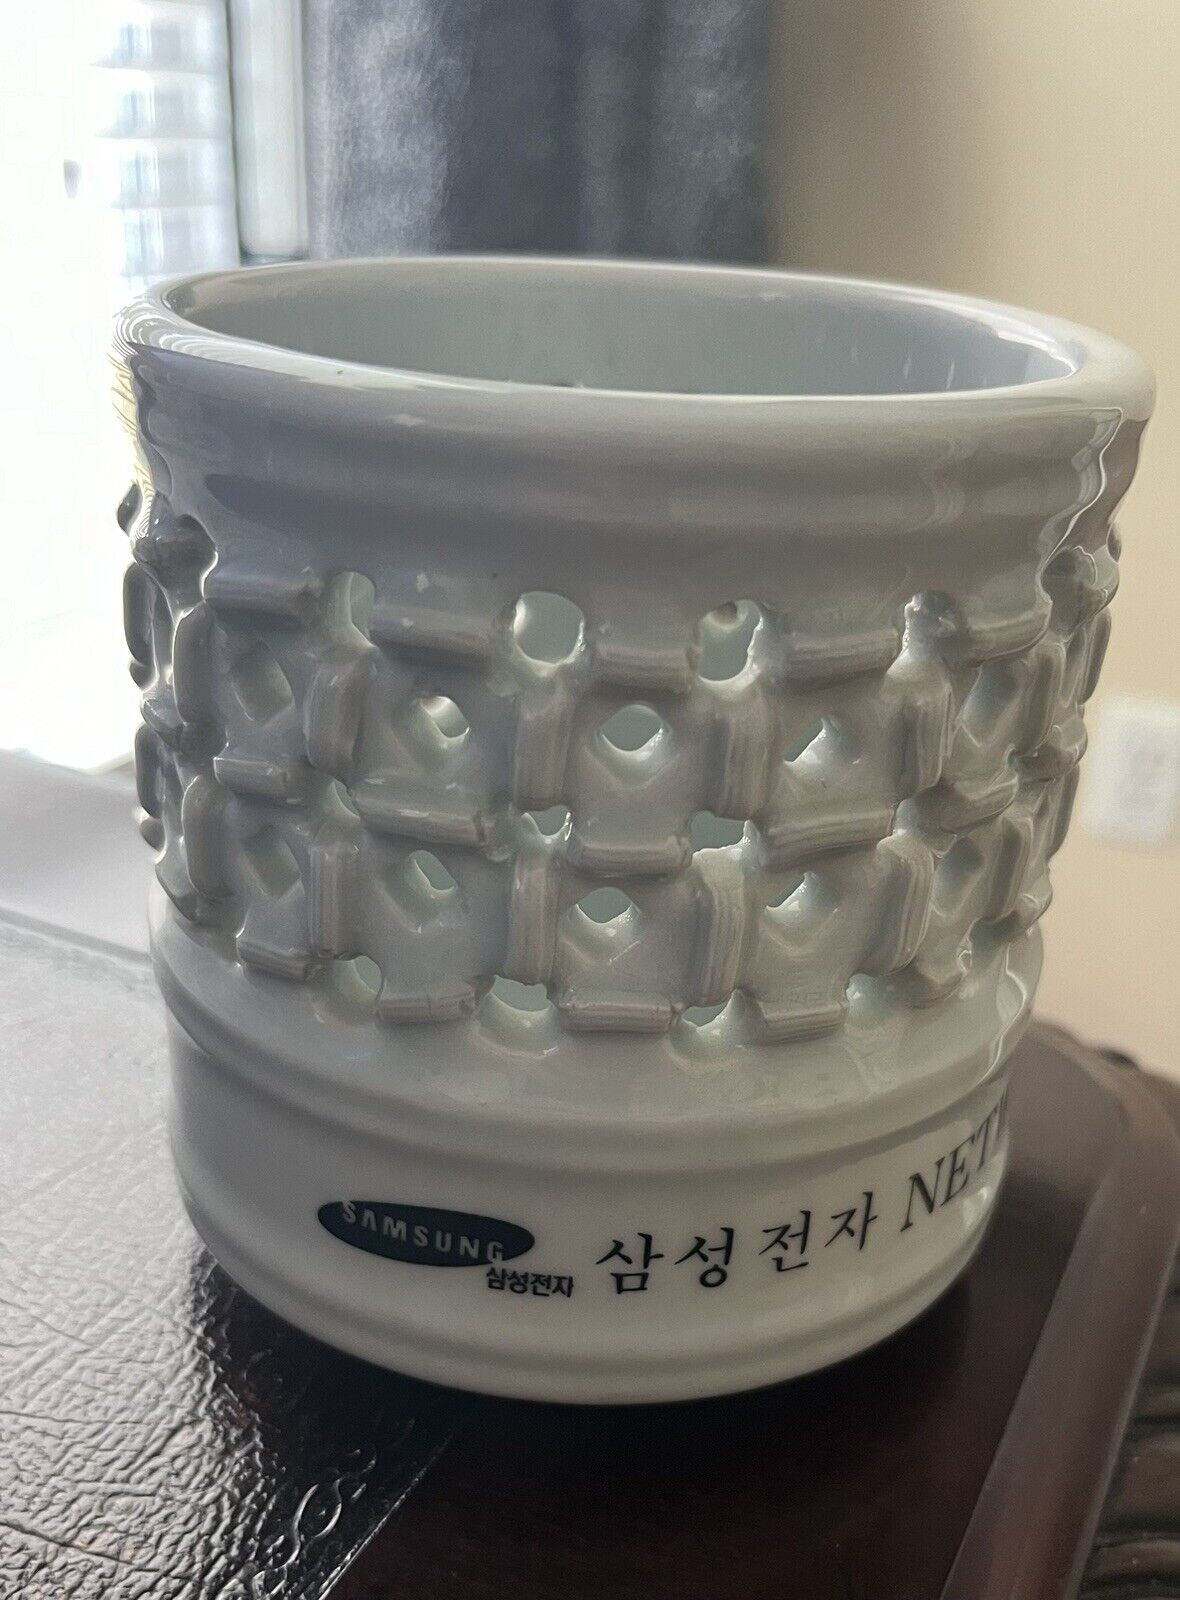 Samsung Electronics Network Rare White Porcelain Container Desk Organizer Pencup